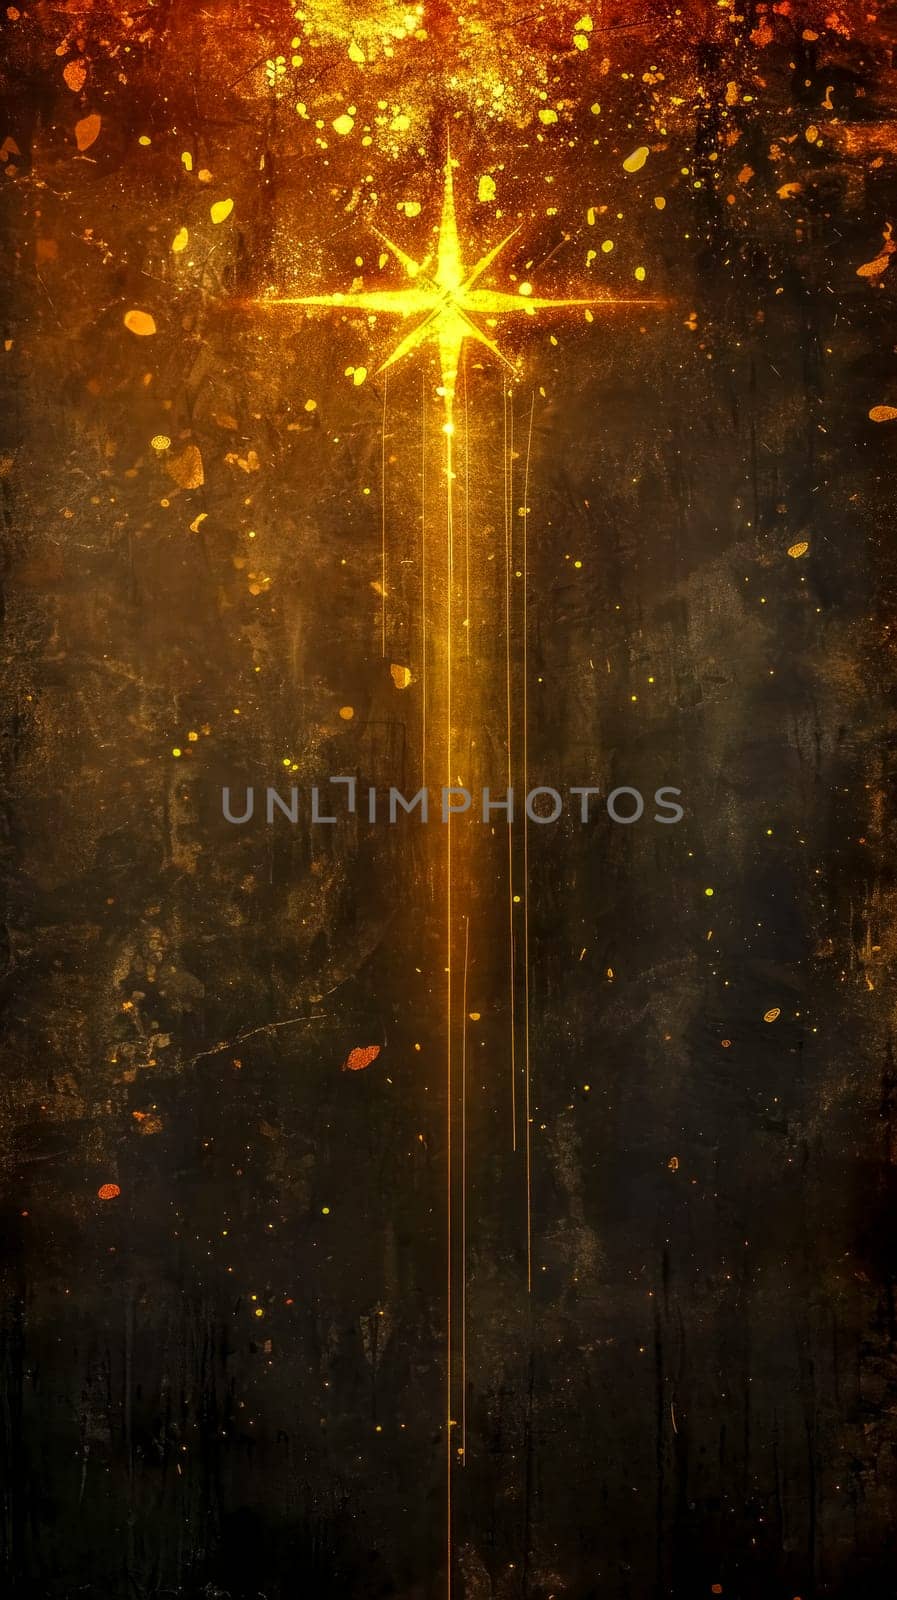 Golden cross radiating light amidst a mystical, dark backdrop, symbolizing hope and divinity, vertical